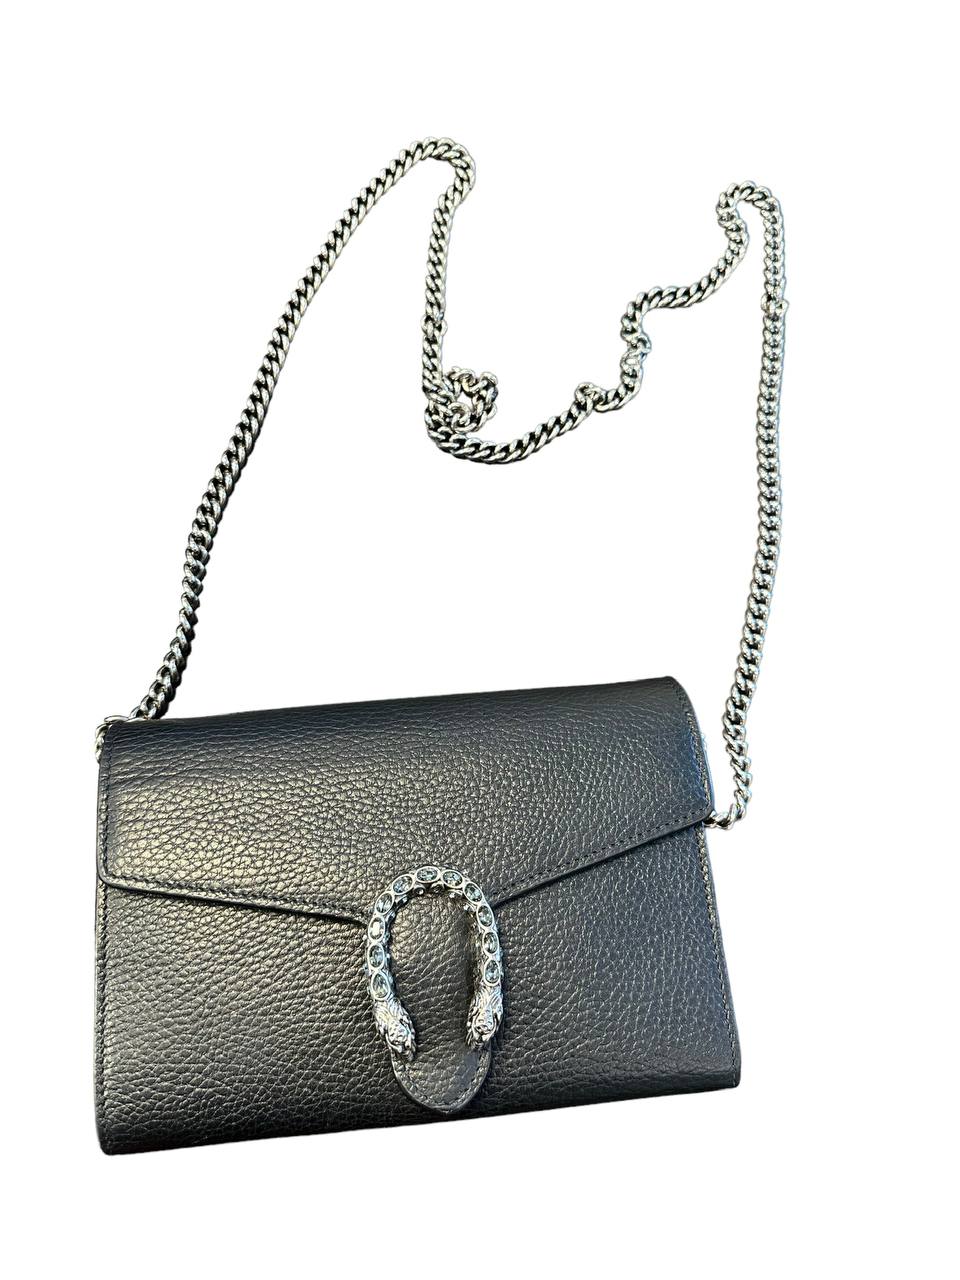 GUCCI - Black Grained Leather Dionysus Mini Chain Bag